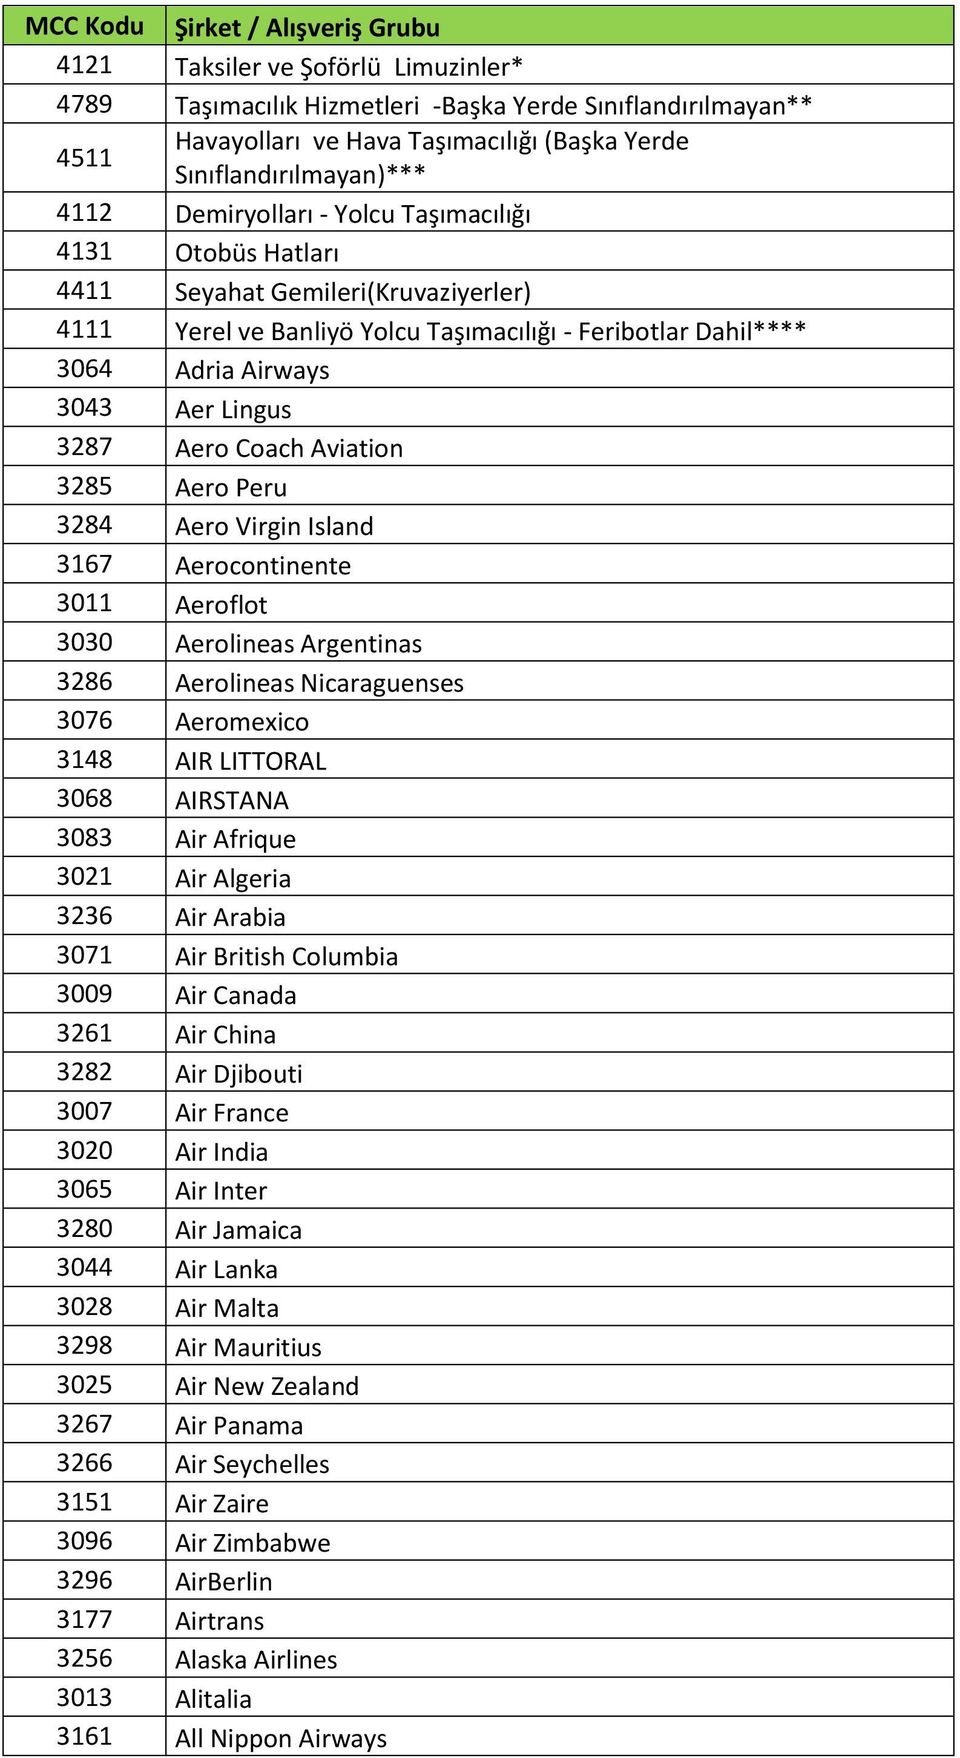 Airways 3043 Aer Lingus 3287 Aero Coach Aviation 3285 Aero Peru 3284 Aero Virgin Island 3167 Aerocontinente 3011 Aeroflot 3030 Aerolineas Argentinas 3286 Aerolineas Nicaraguenses 3076 Aeromexico 3148